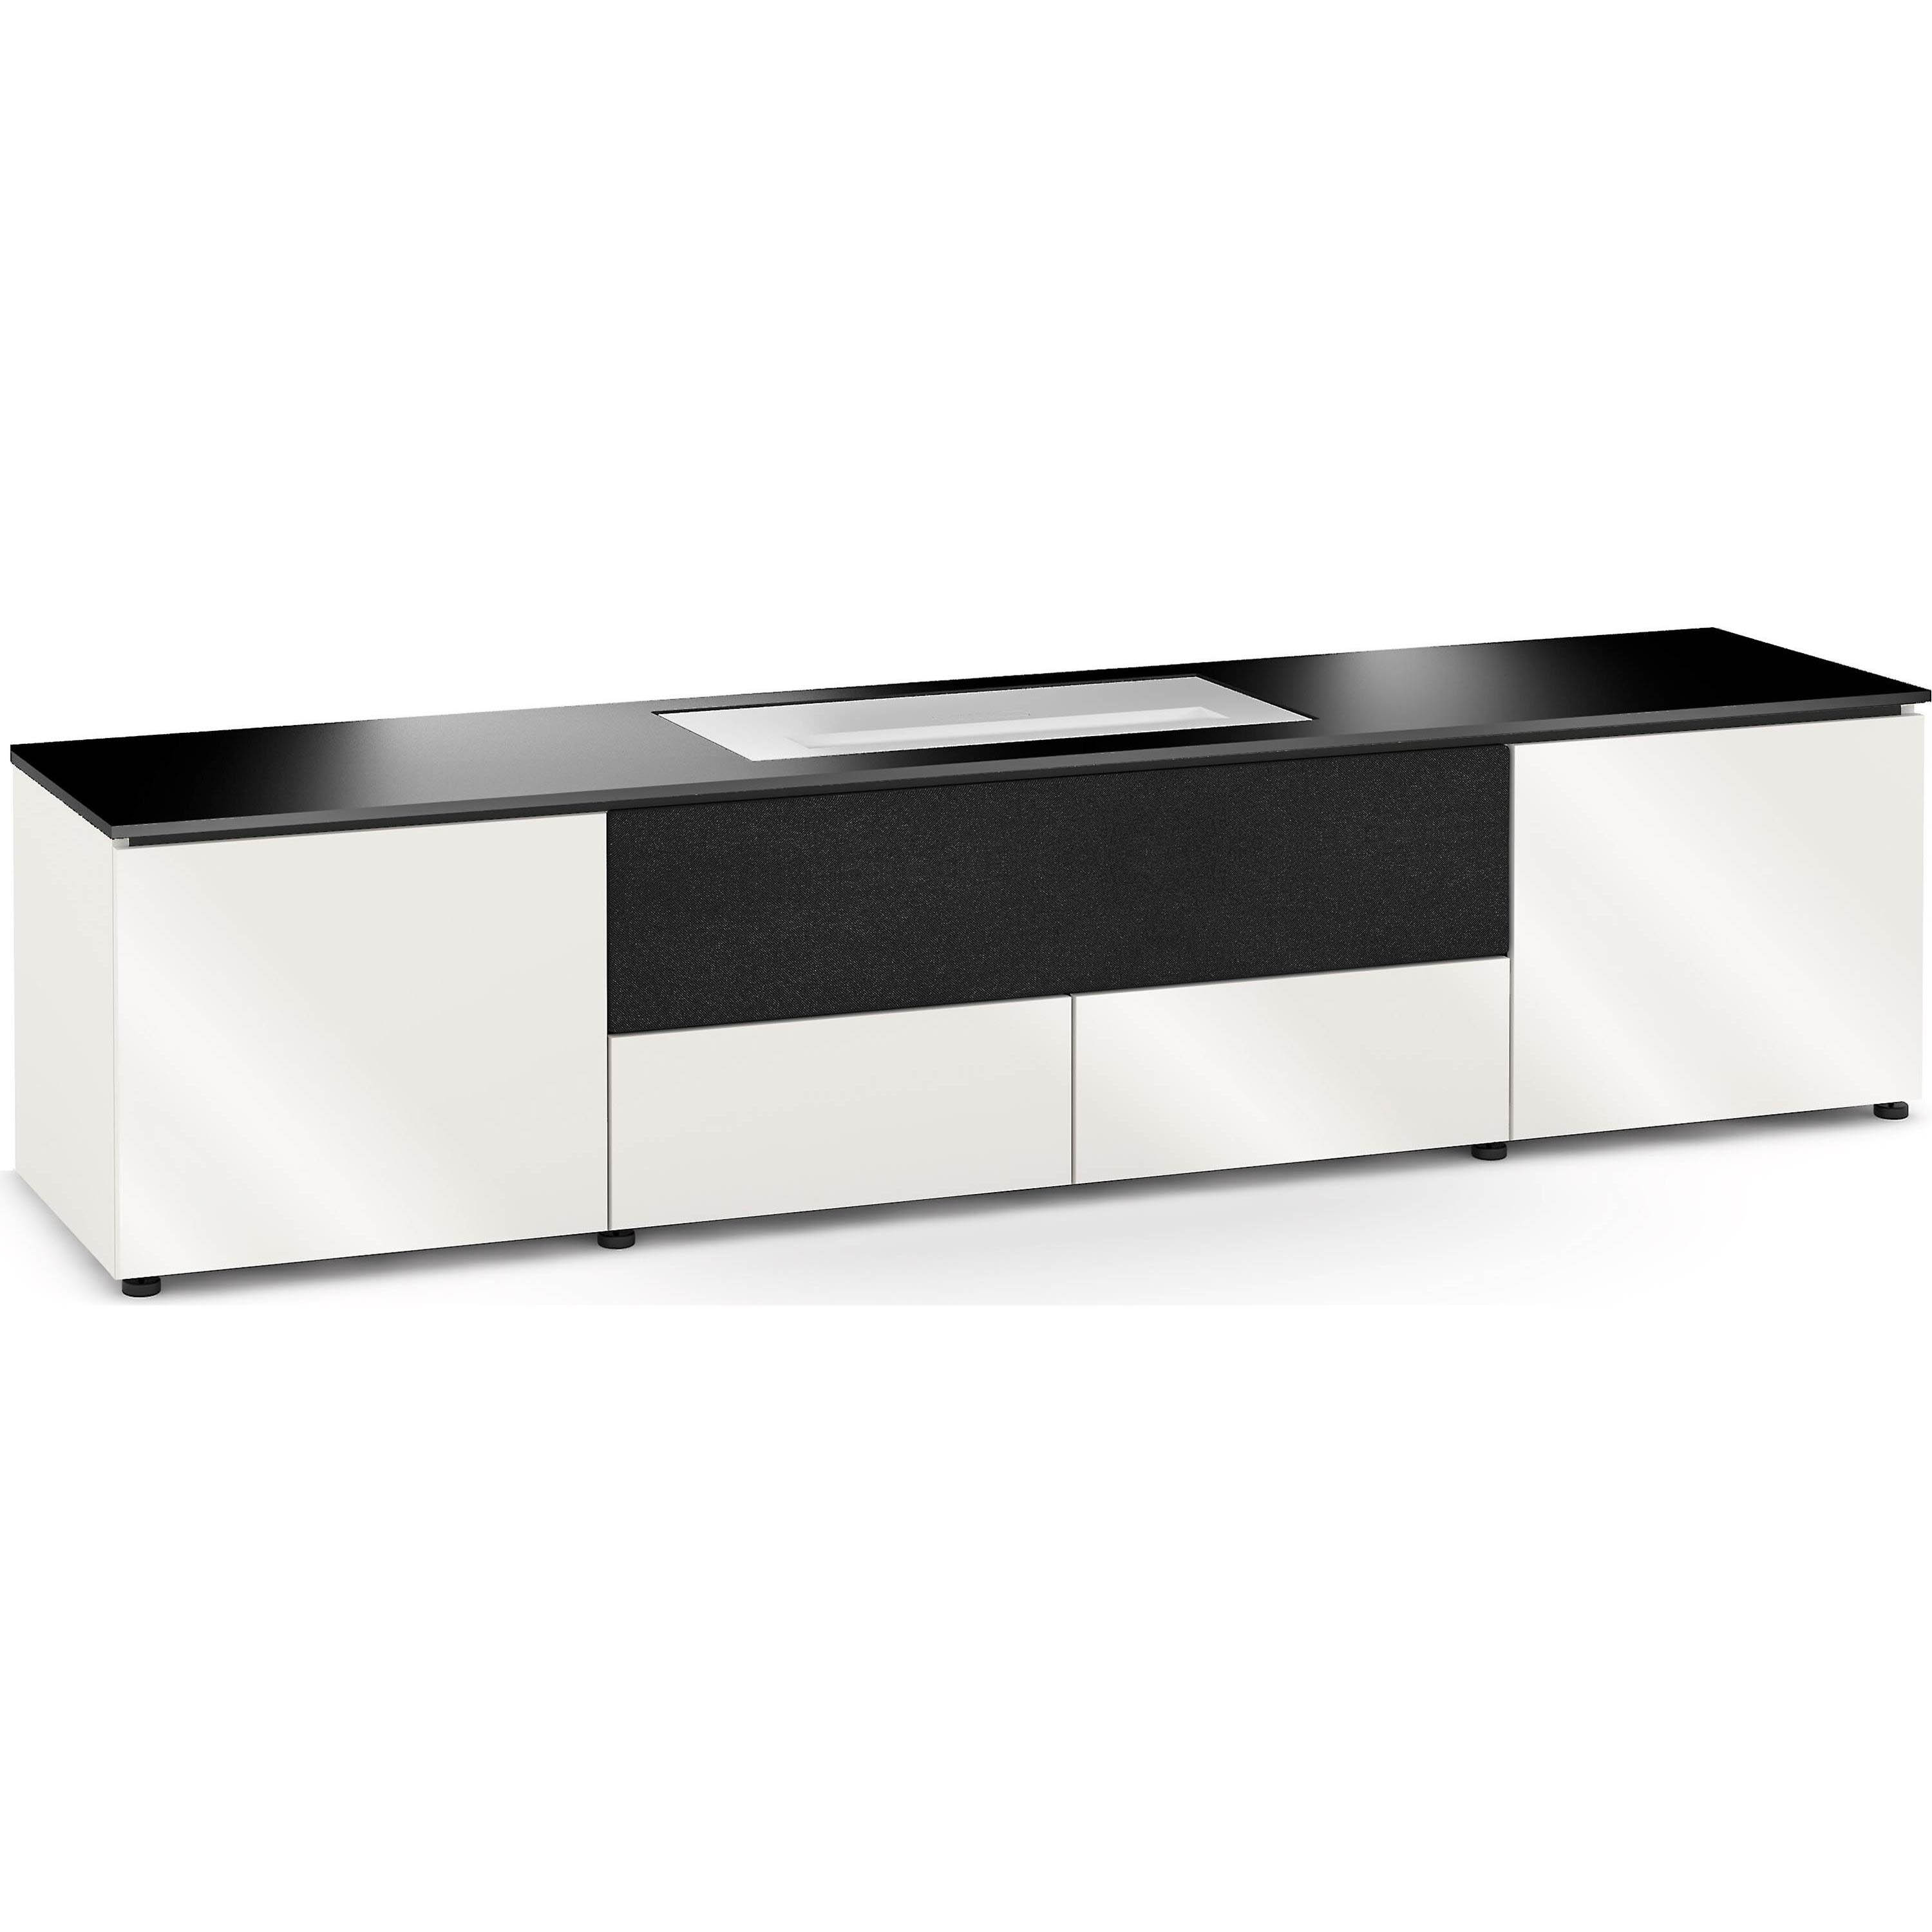 Salamander Designs Miami 245 Cabinet for integrated LG HU85LA/S UST Projector - Gloss White, Black Top - X/LG1/245GW/BK